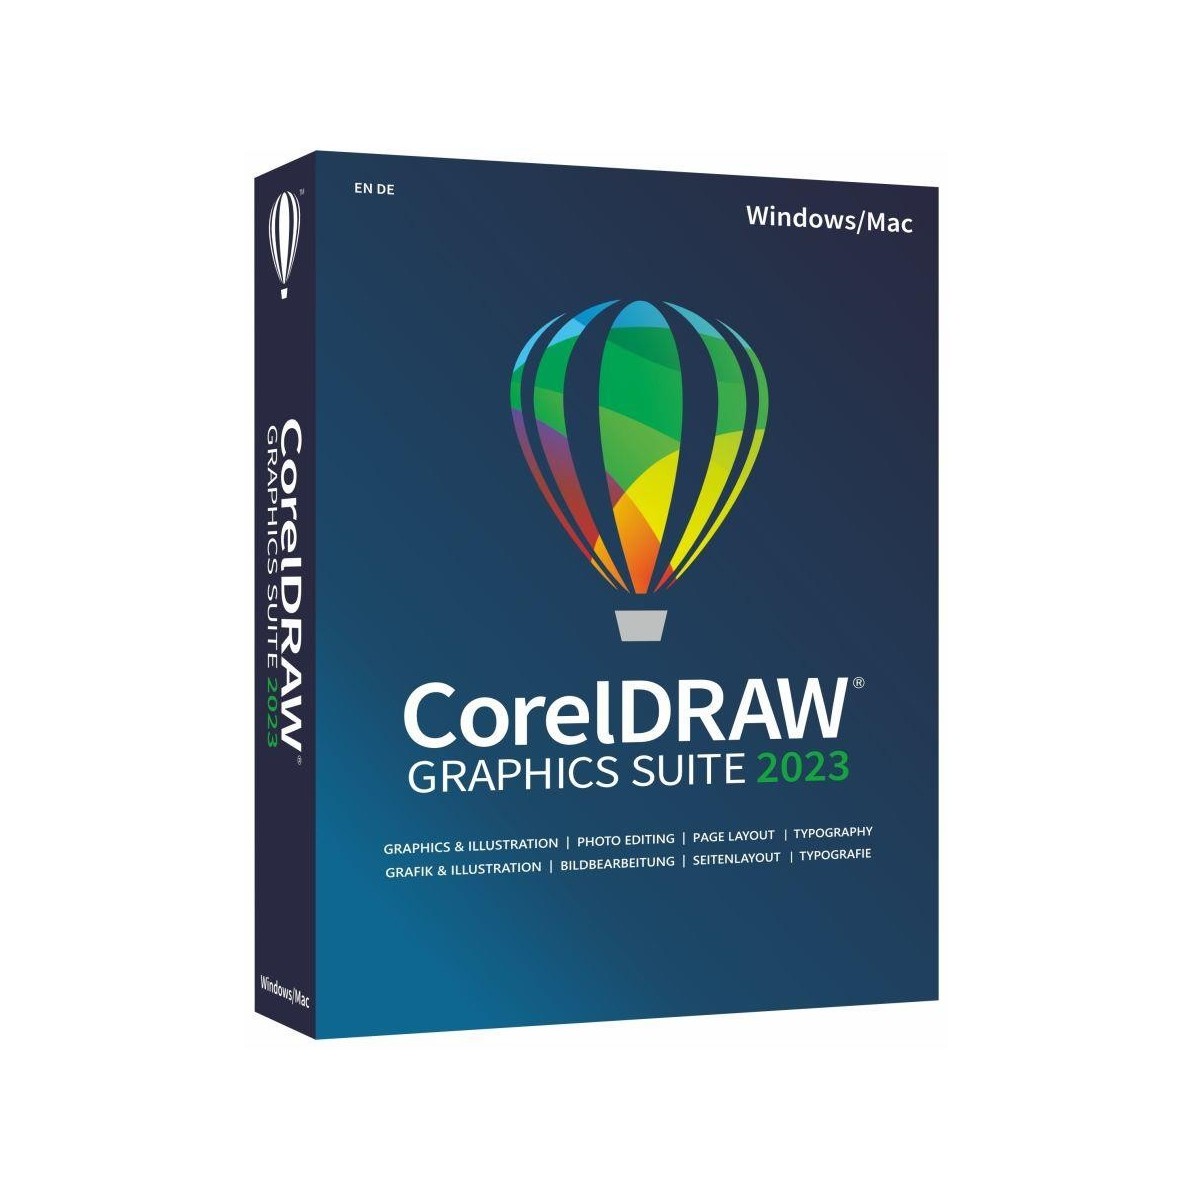 Program Corel DRAW Graphic Suite 2023 Minibox EU